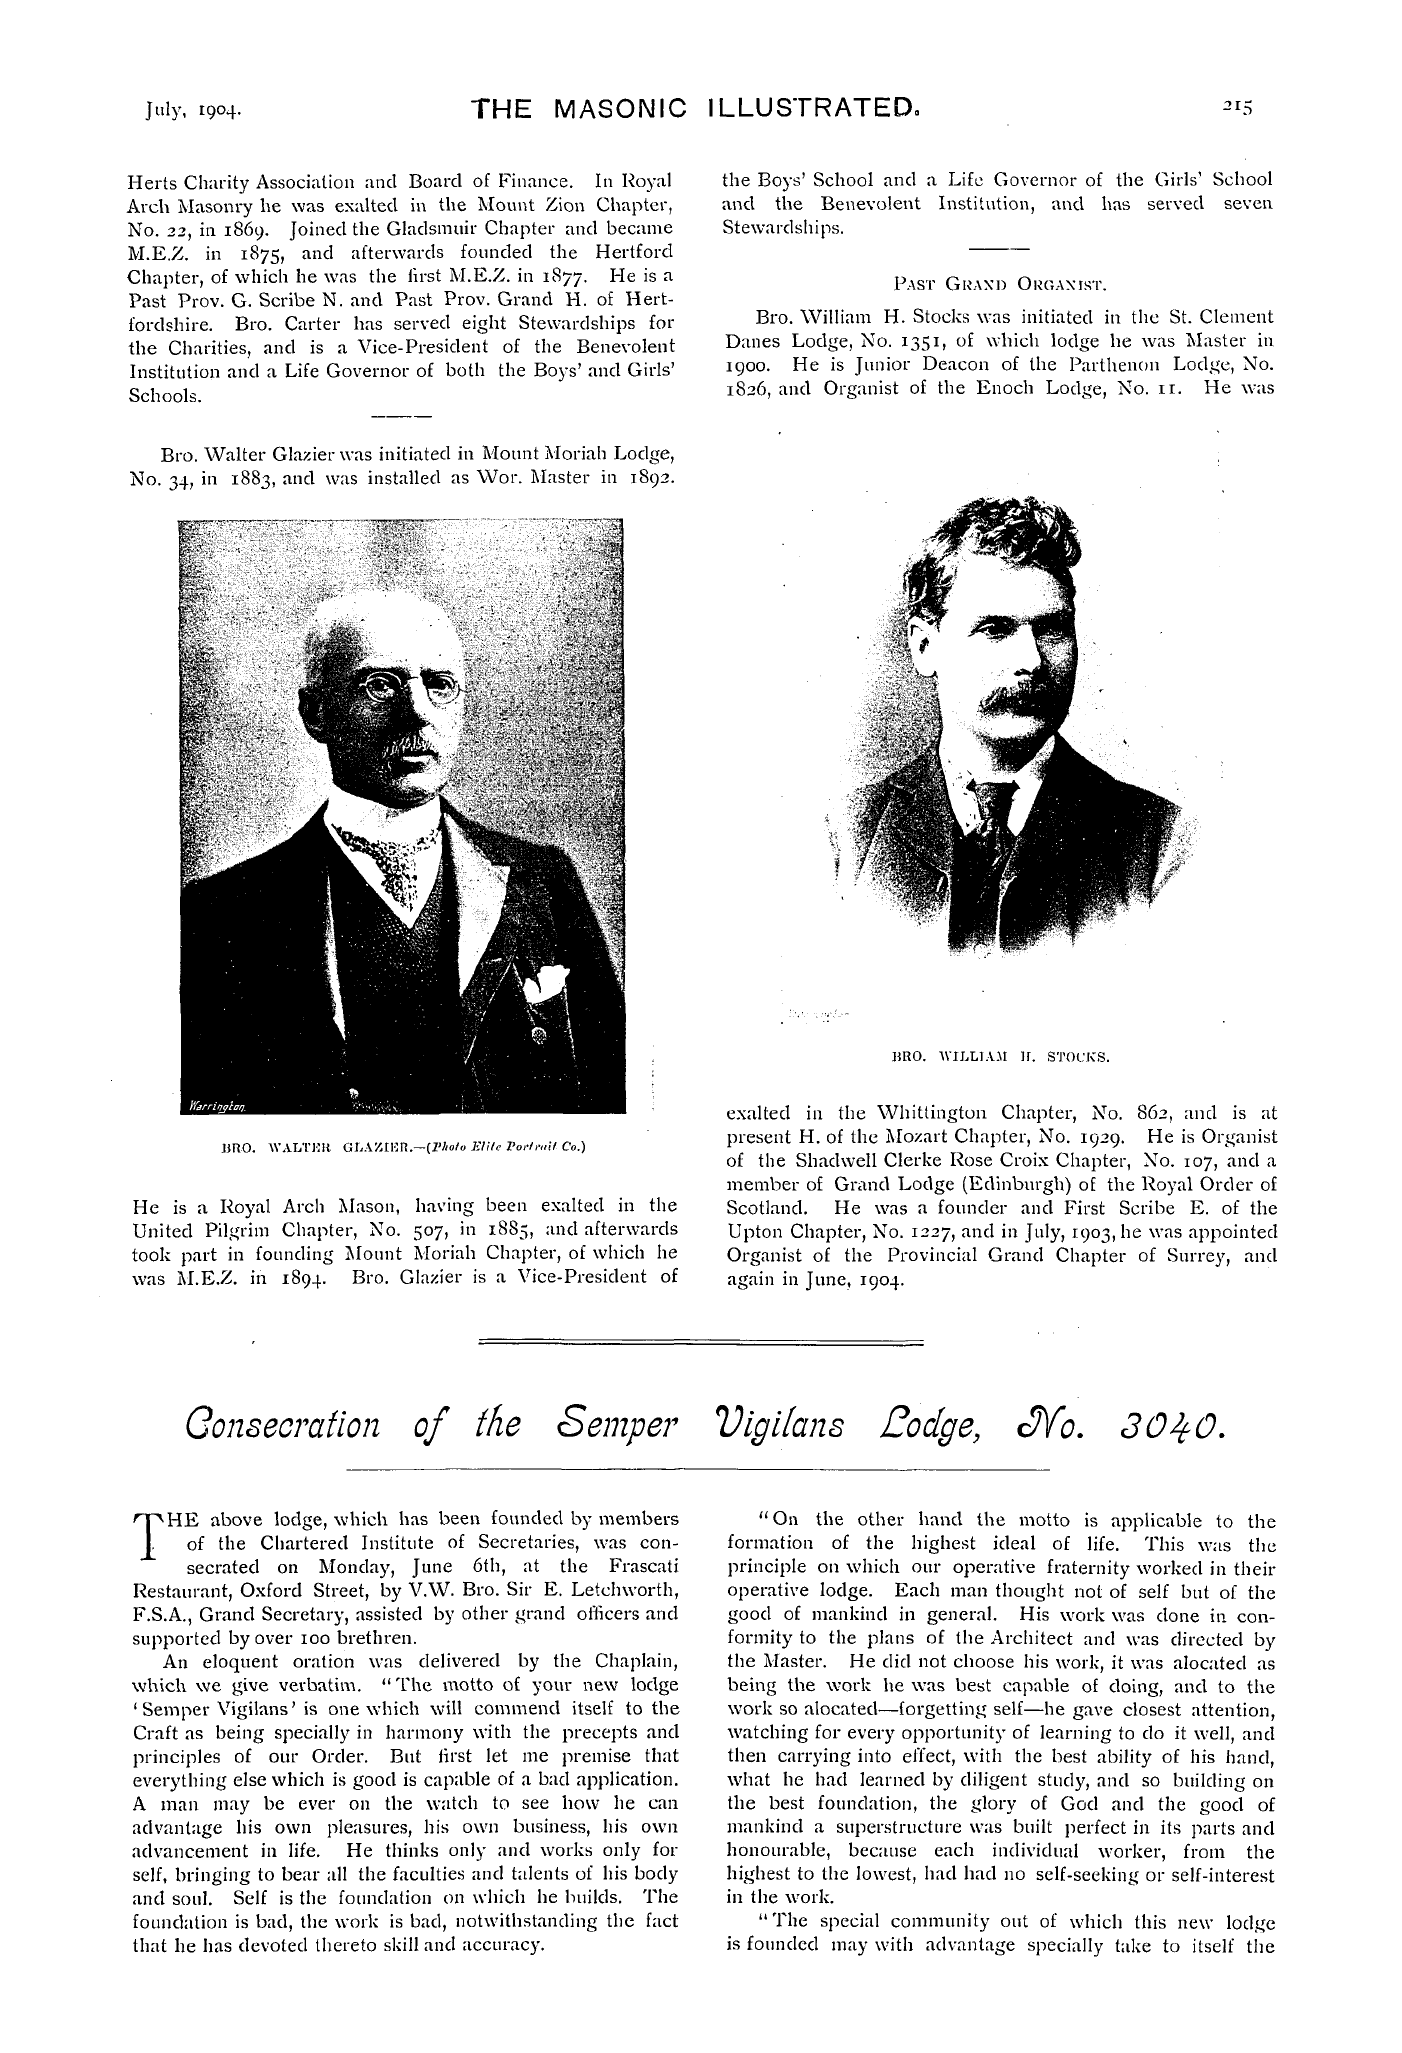 The Masonic Illustrated: 1904-07-01: 9